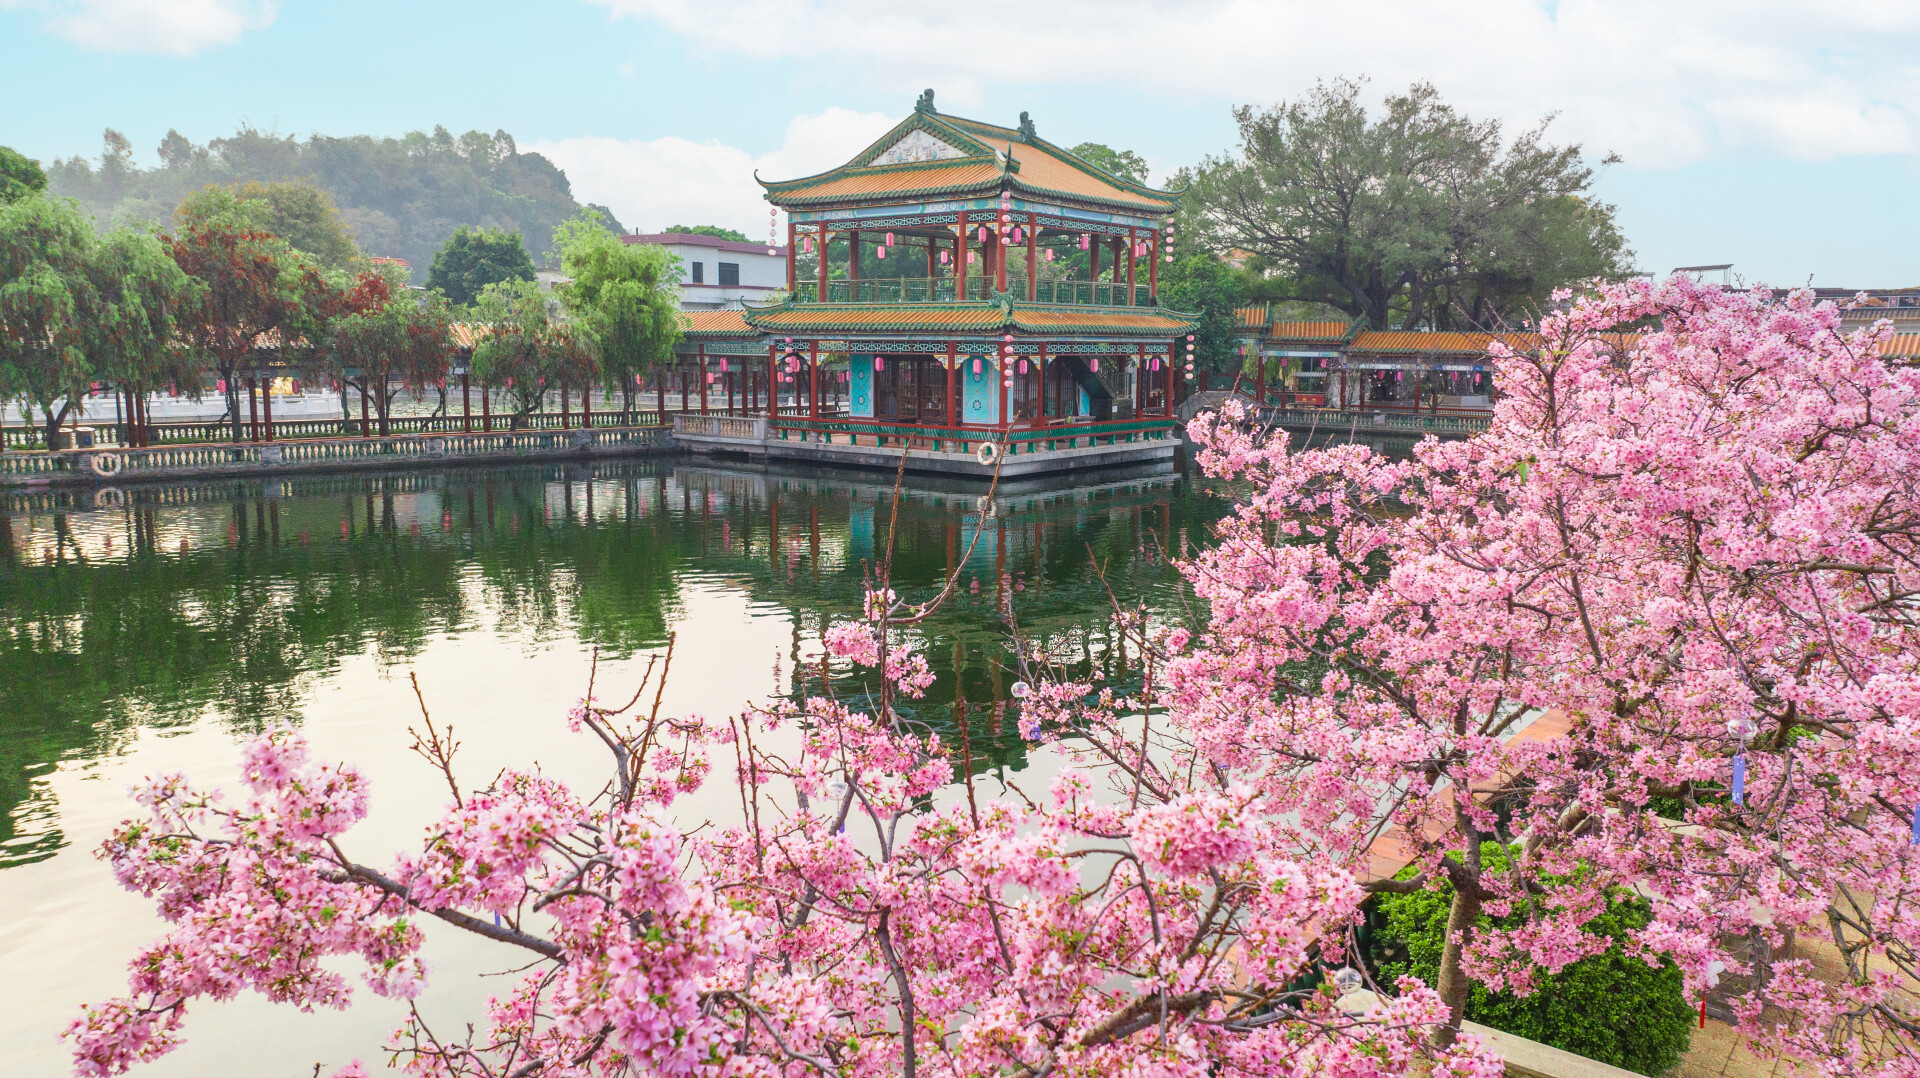 Enjoy cherry blossoms and springtime in Guangzhou's Baomo Garden